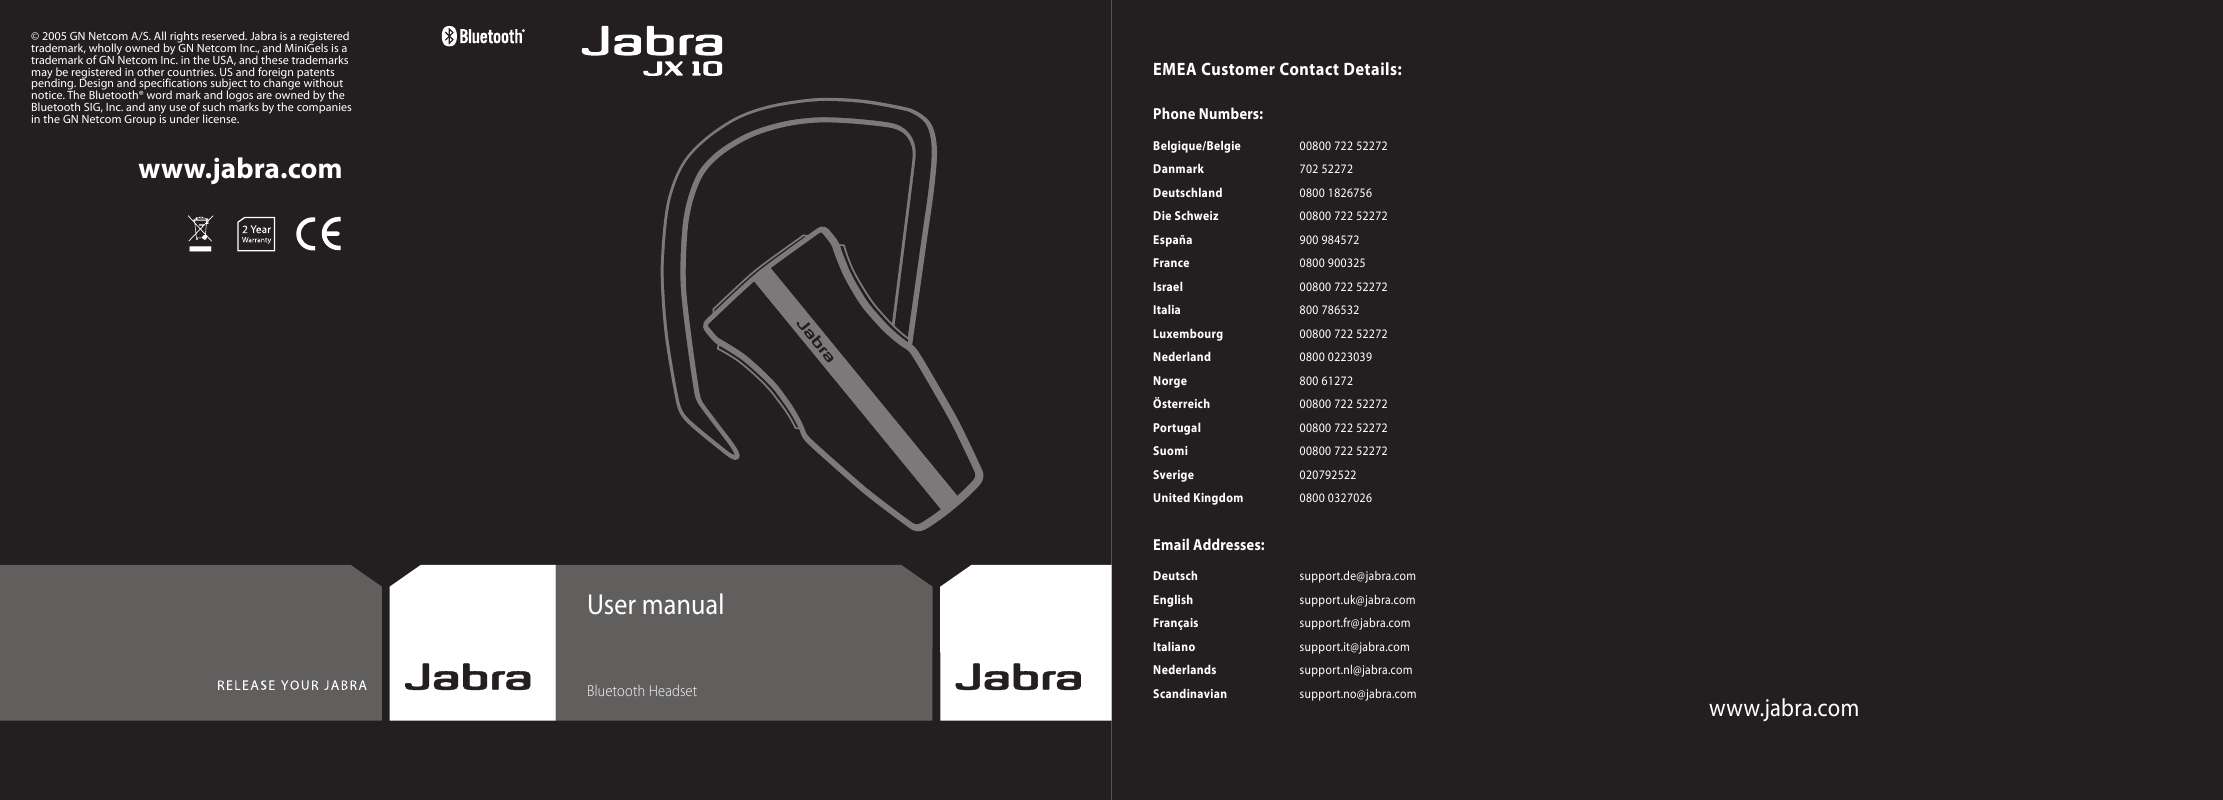 Guide utilisation JABRA JX 10  de la marque JABRA